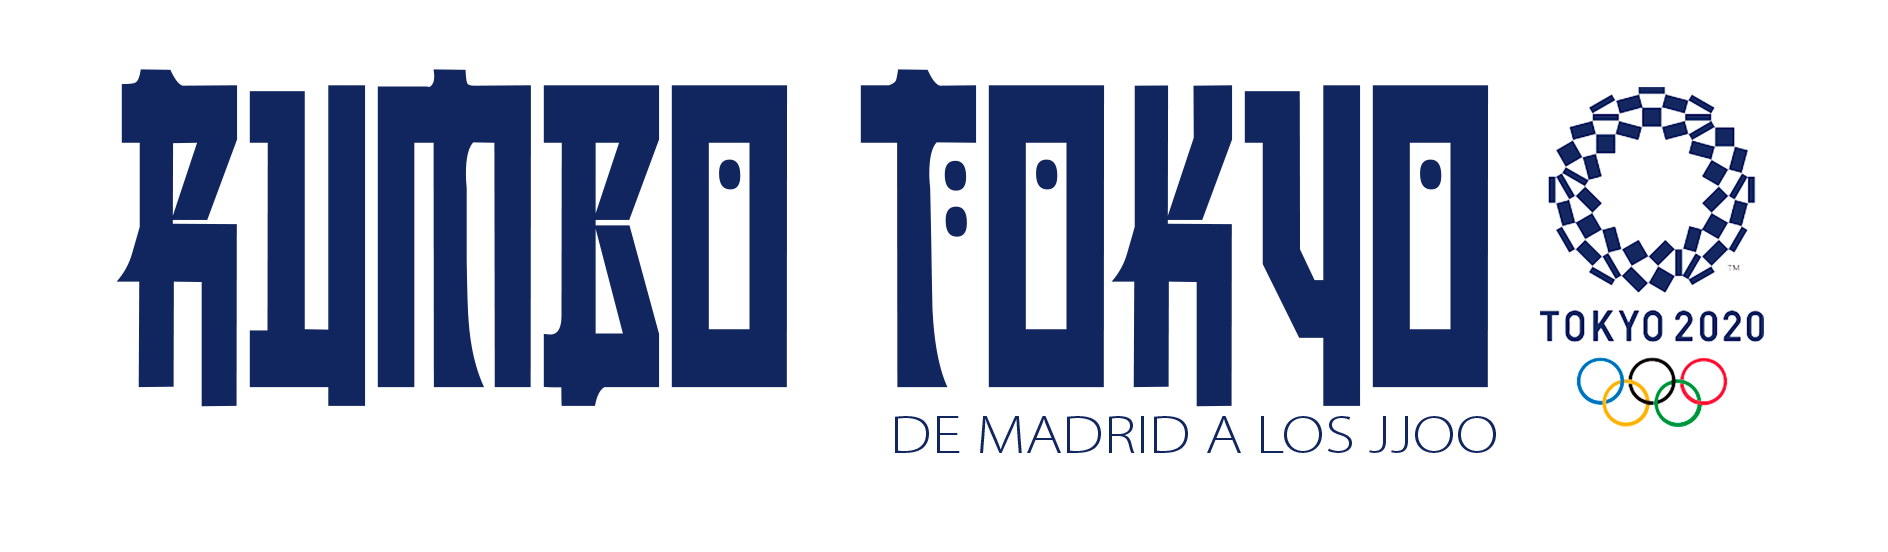 logo TOKYO